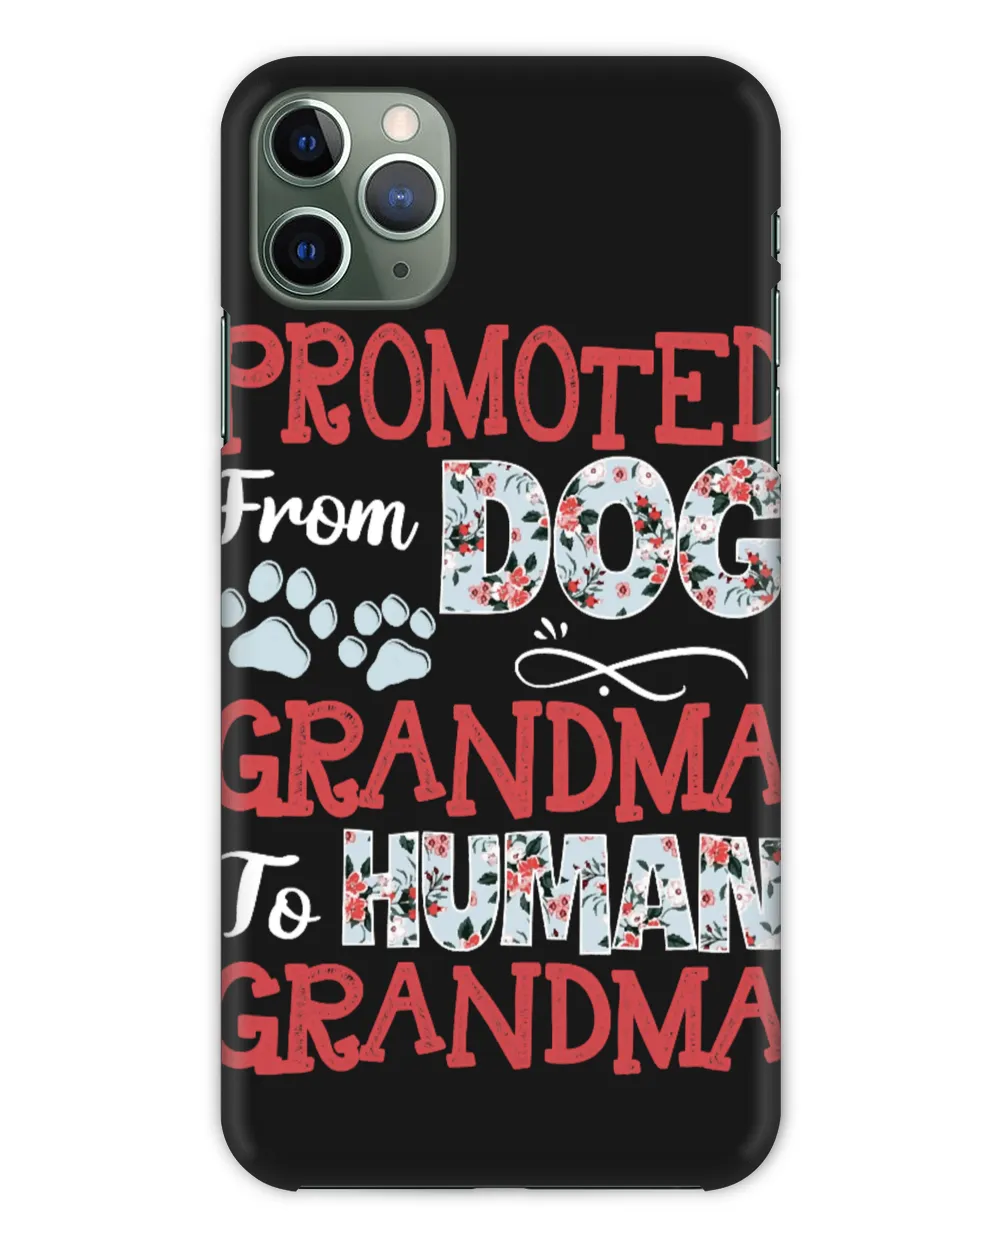 Mother Promoted From Dog Grandma to Human Grandma 215 Mom